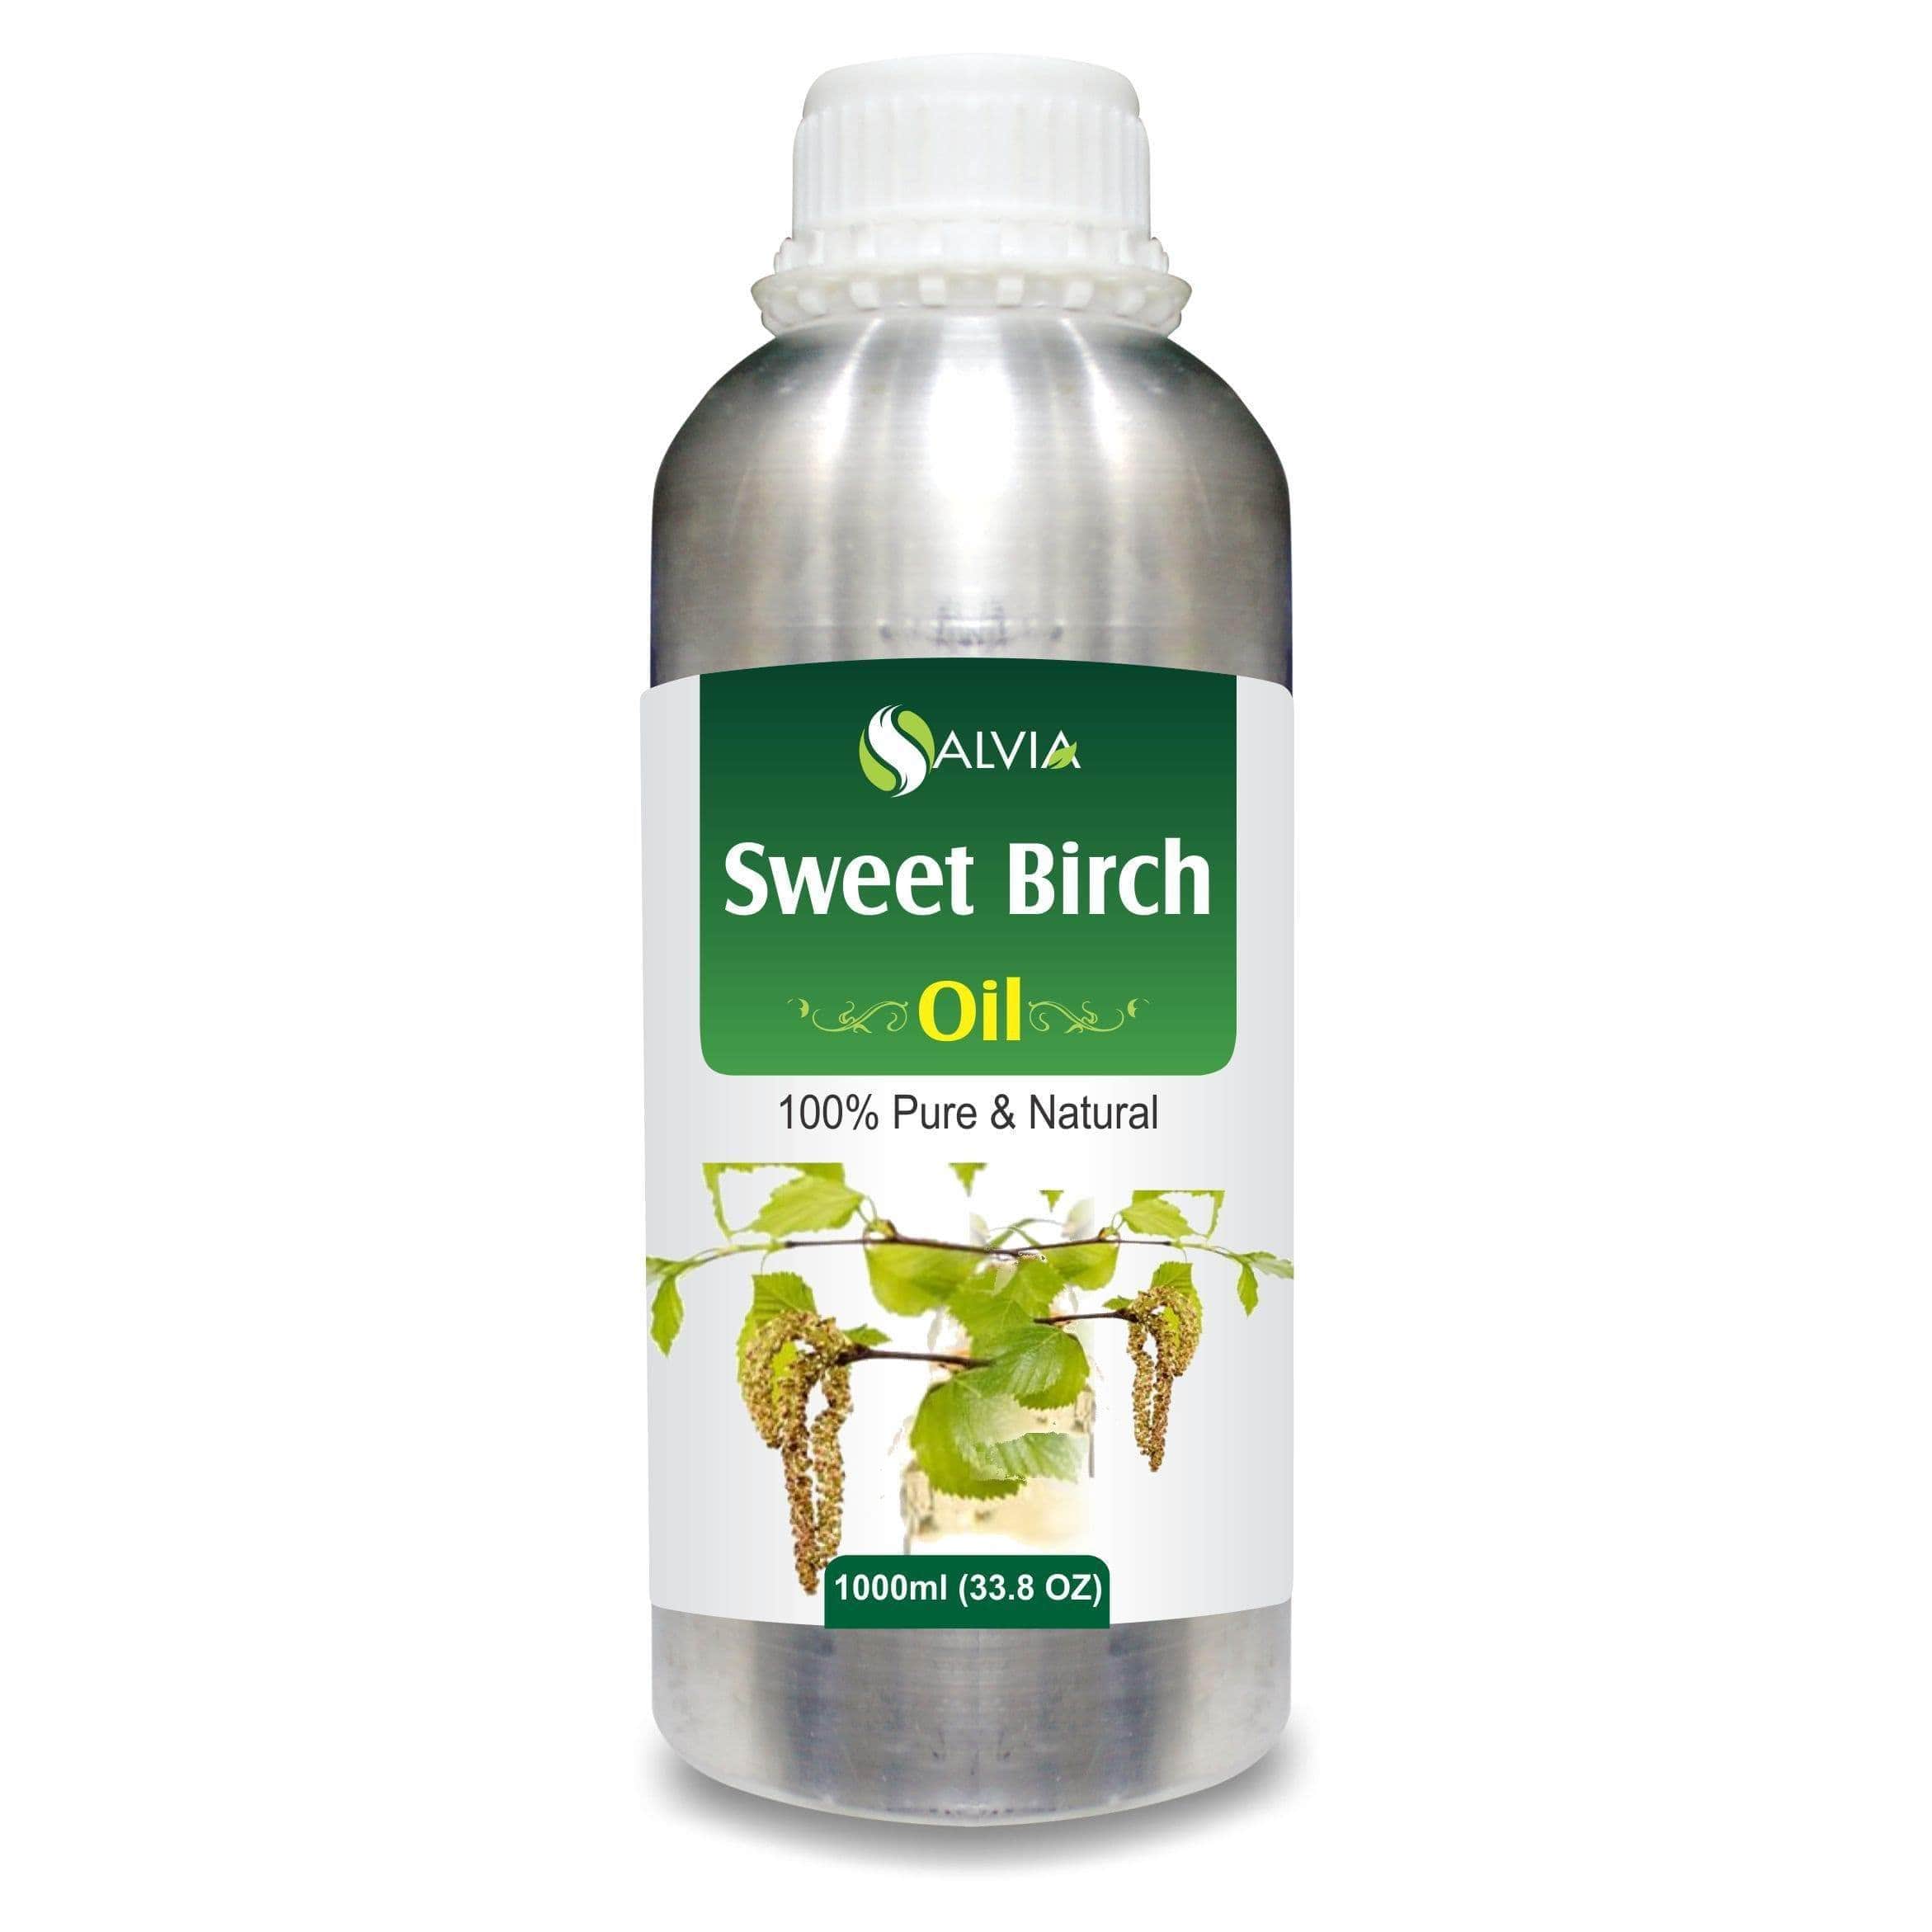 Sweet Birch Oil benefits 